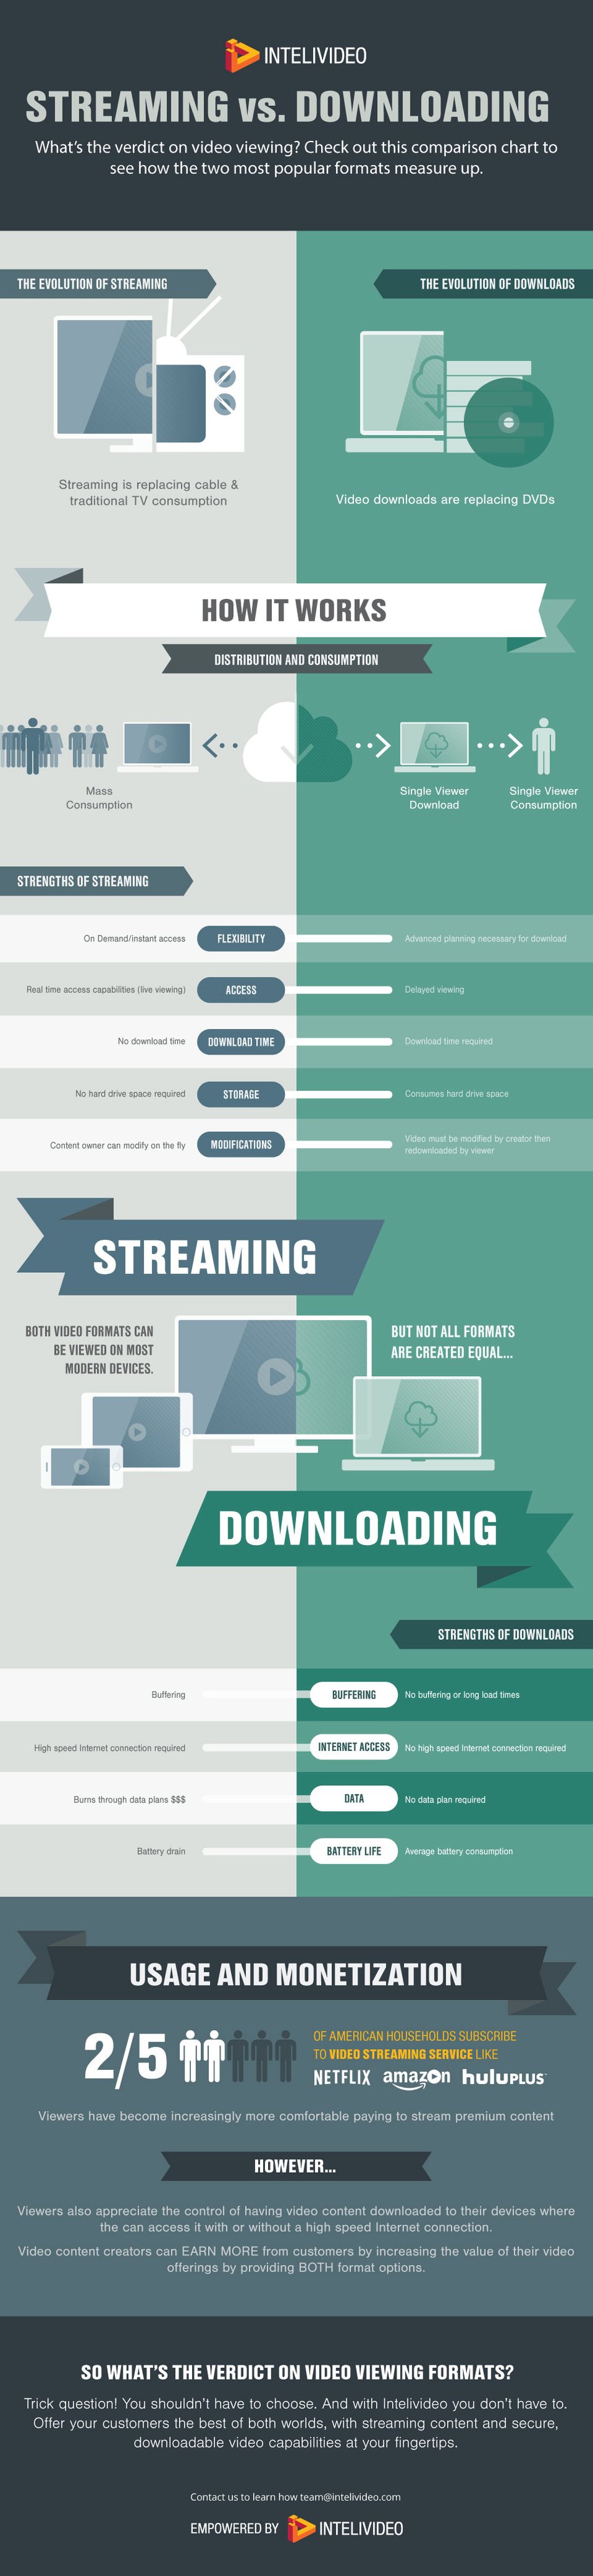 intelivideo-streaming-vs-downloading-infographic.jpg